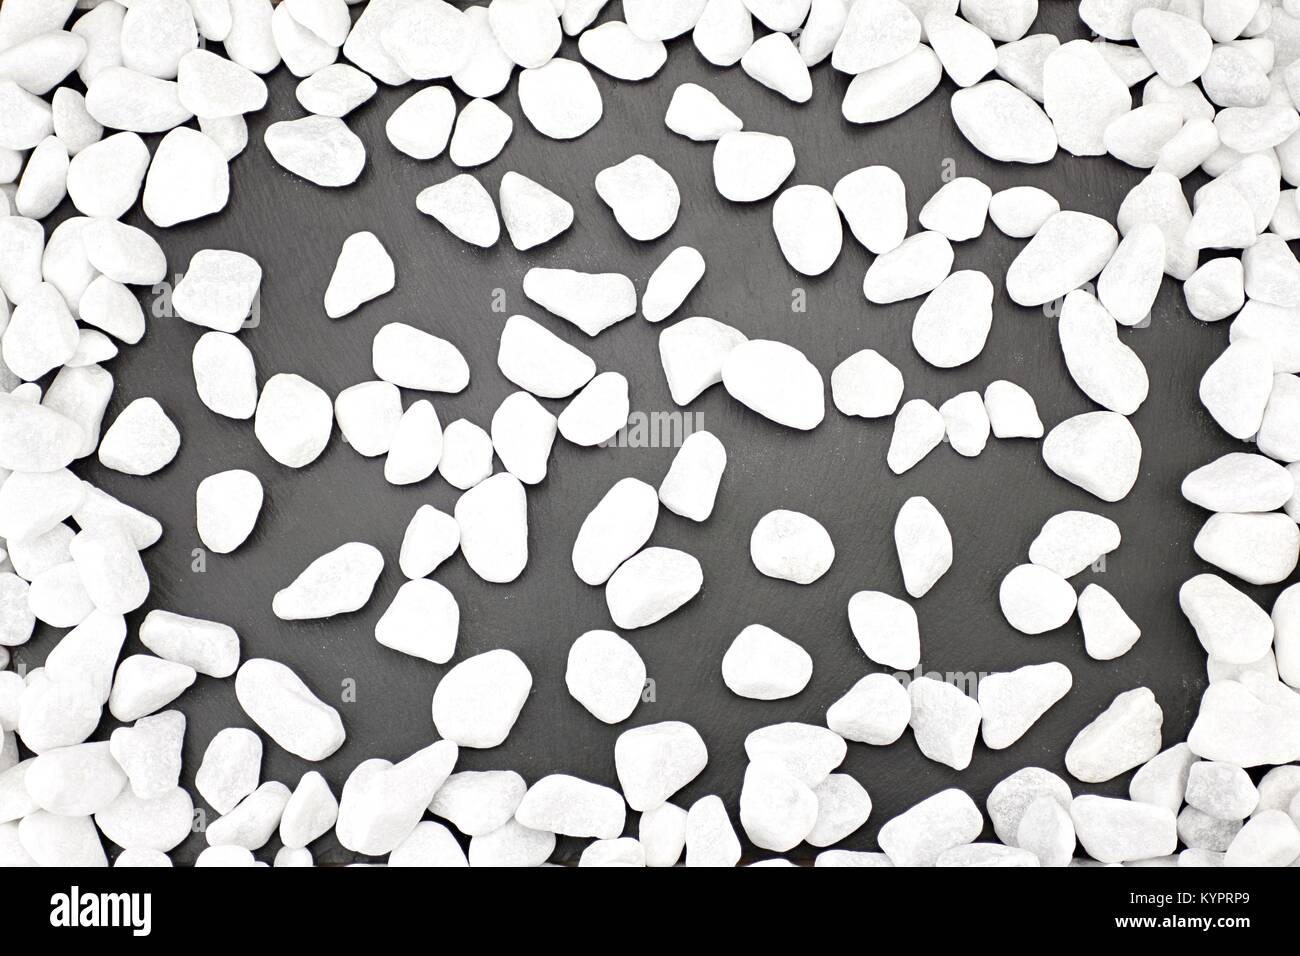 Black background with white pebbles Stock Photo